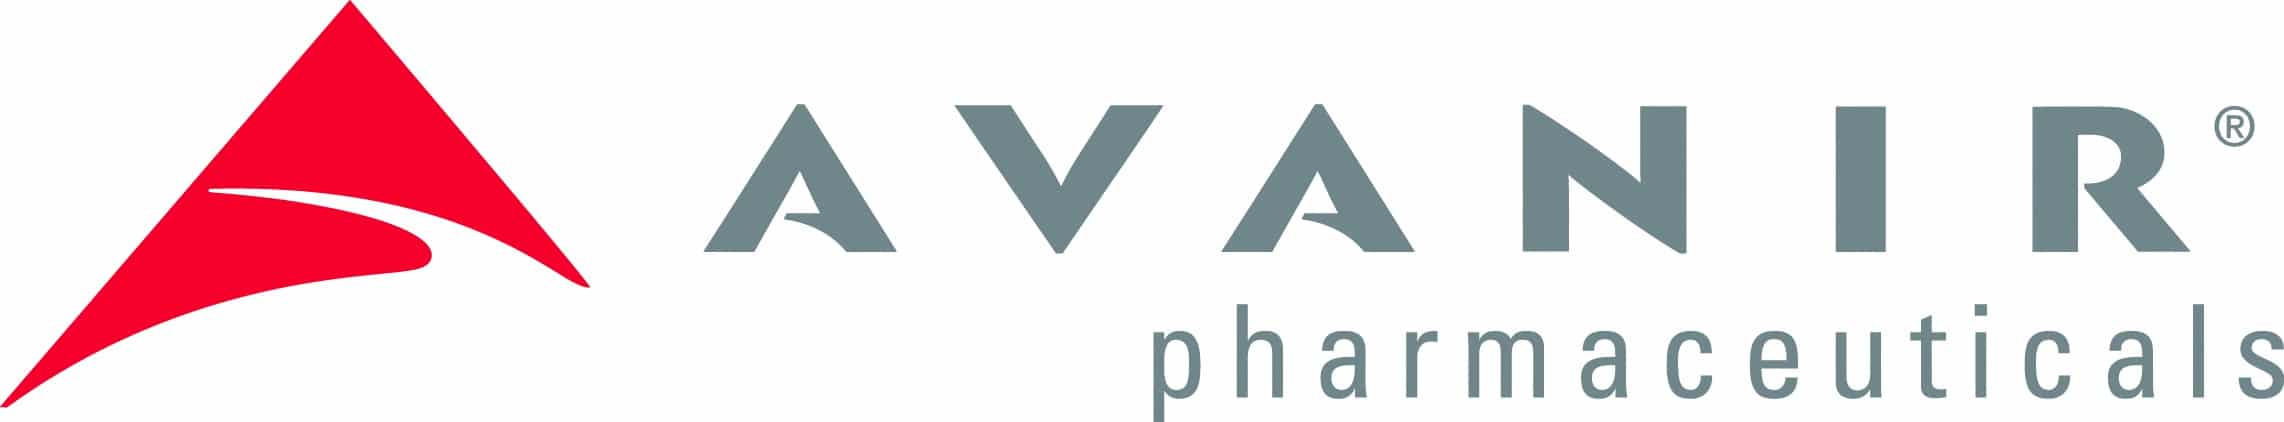 Avanir Pharmaceuticals logo.